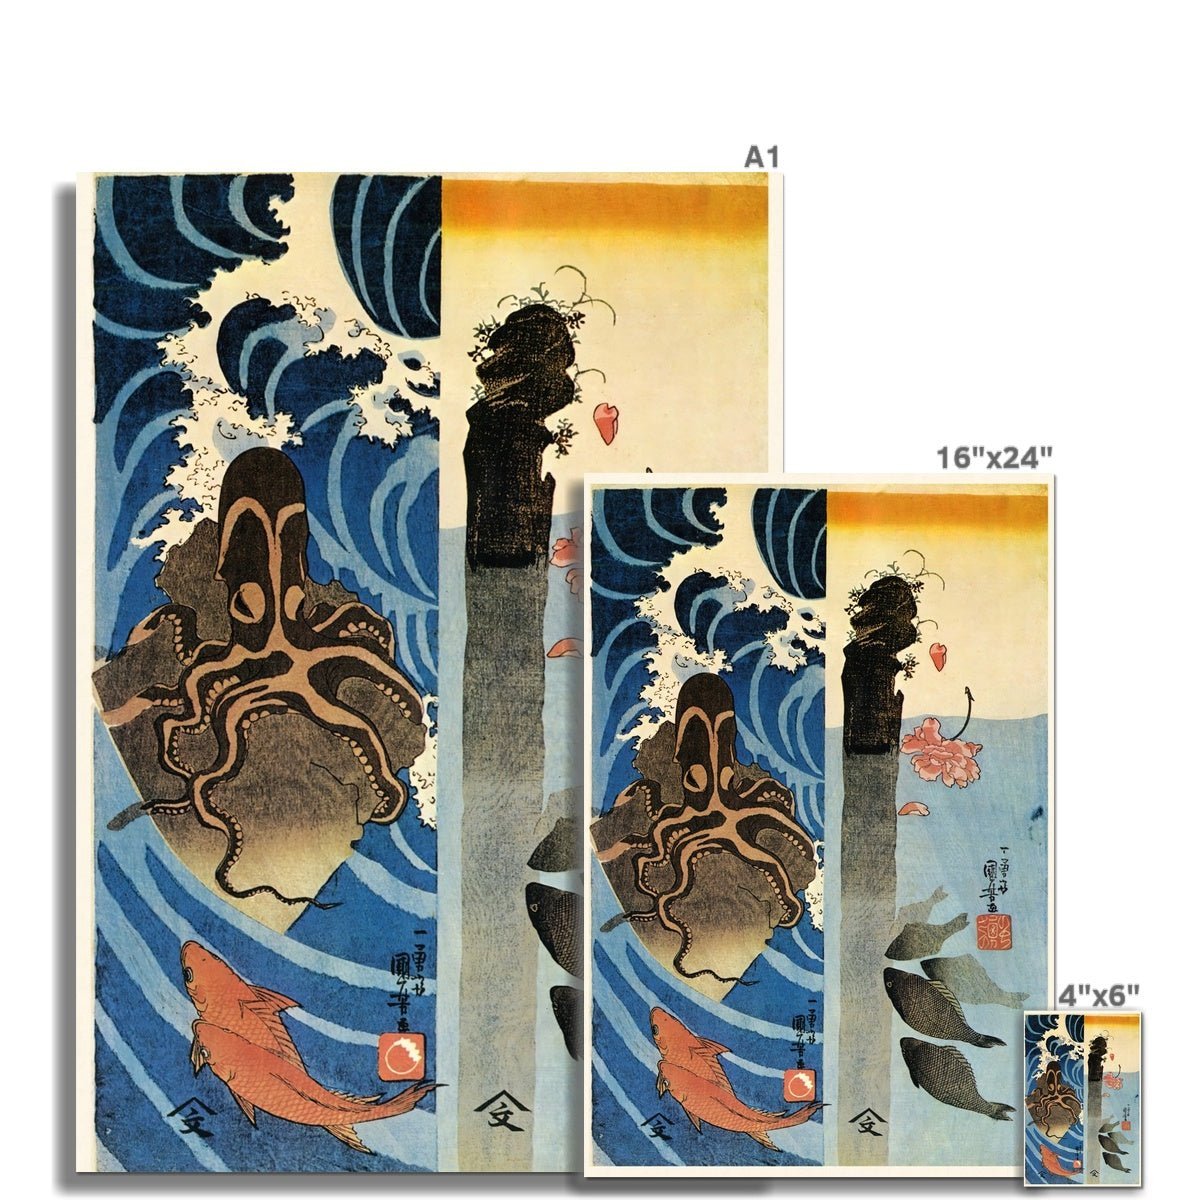 giclee 4"x6" Kuniyoshi Utagawa, Octopus, Red Fish Ukiyo-e Antique Vintage Woodblock Print Marine Life Ocean Creatures Japan Fine Art Print